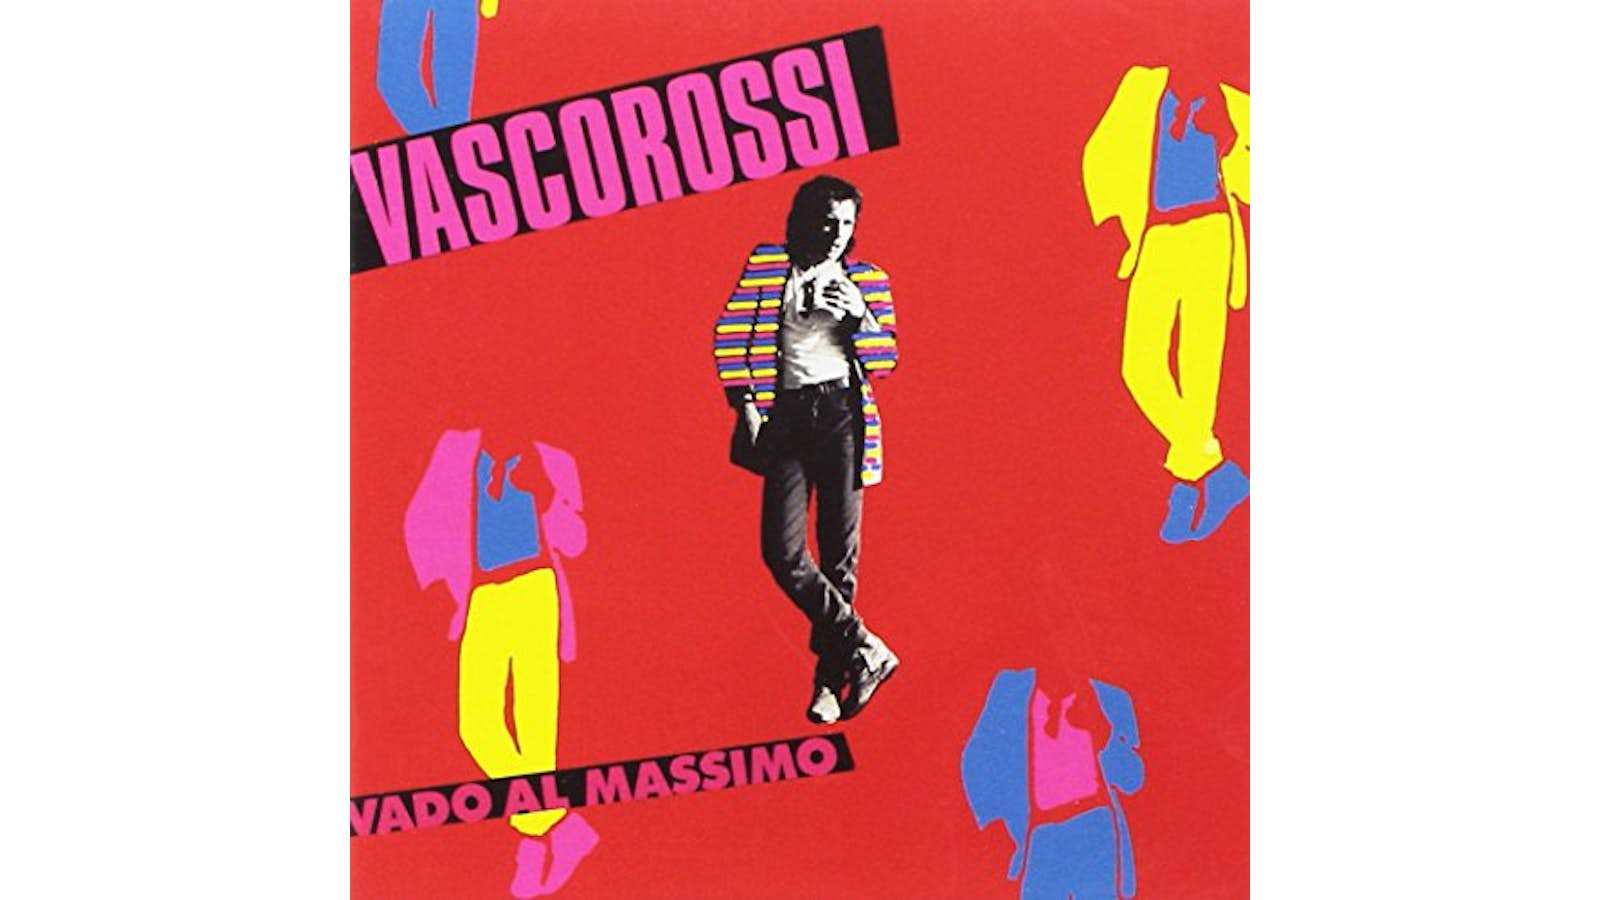 Vasco Rossi - Vado al Massimo, Super Audio Cd High quality remastered